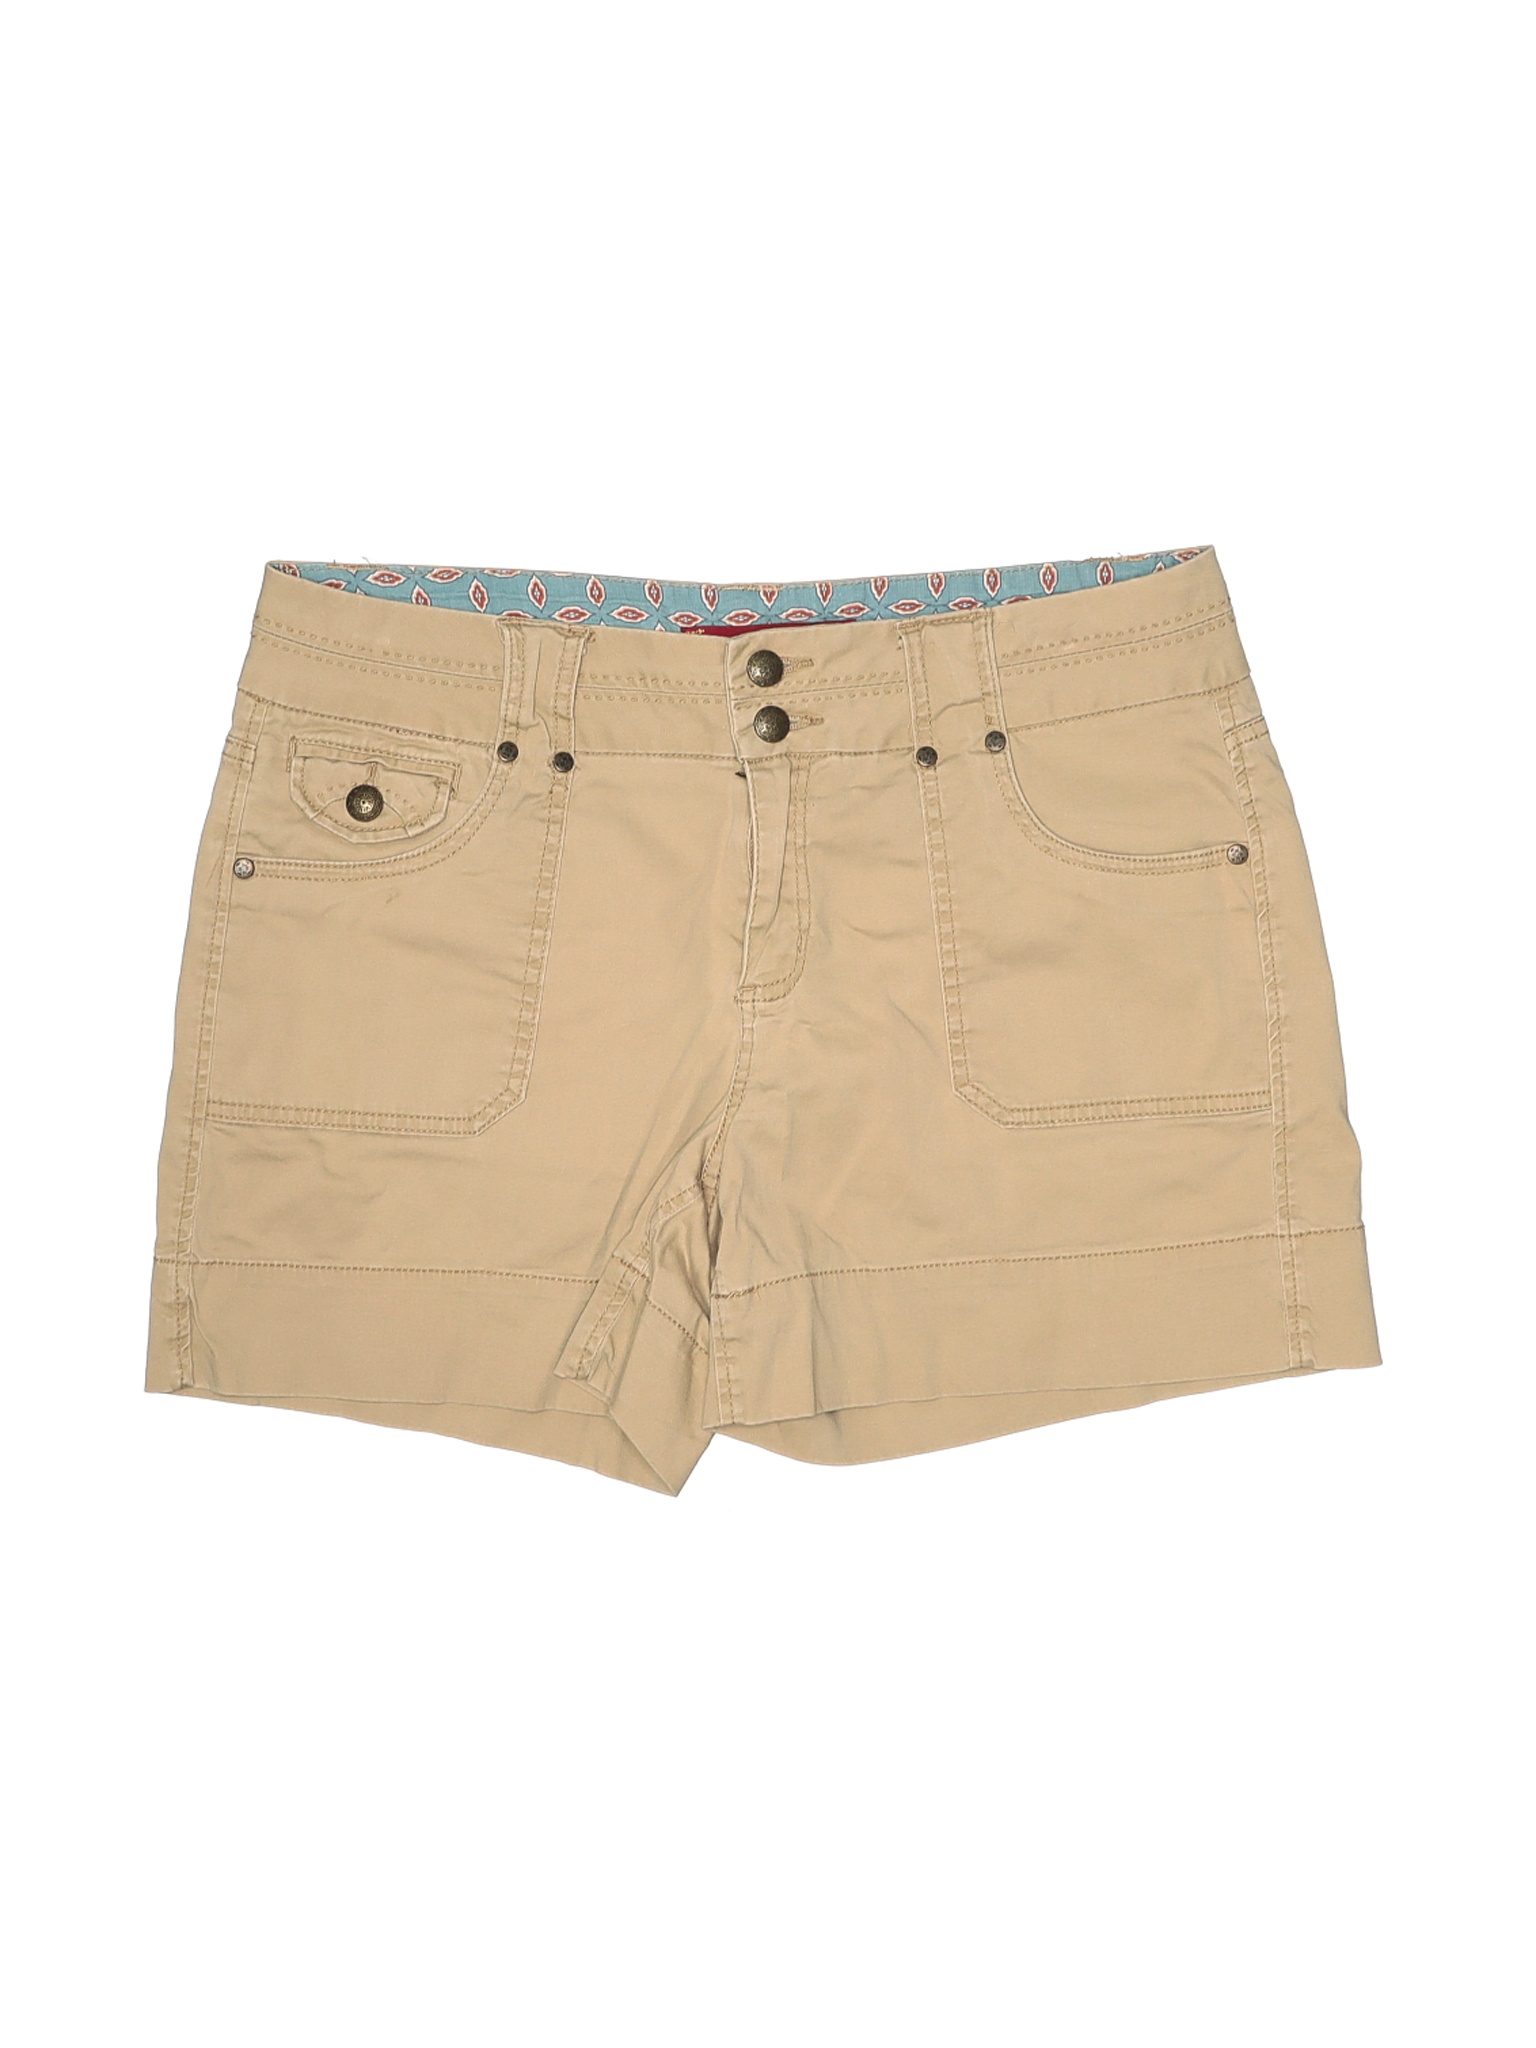 One 5 One Women Brown Shorts 14 | eBay